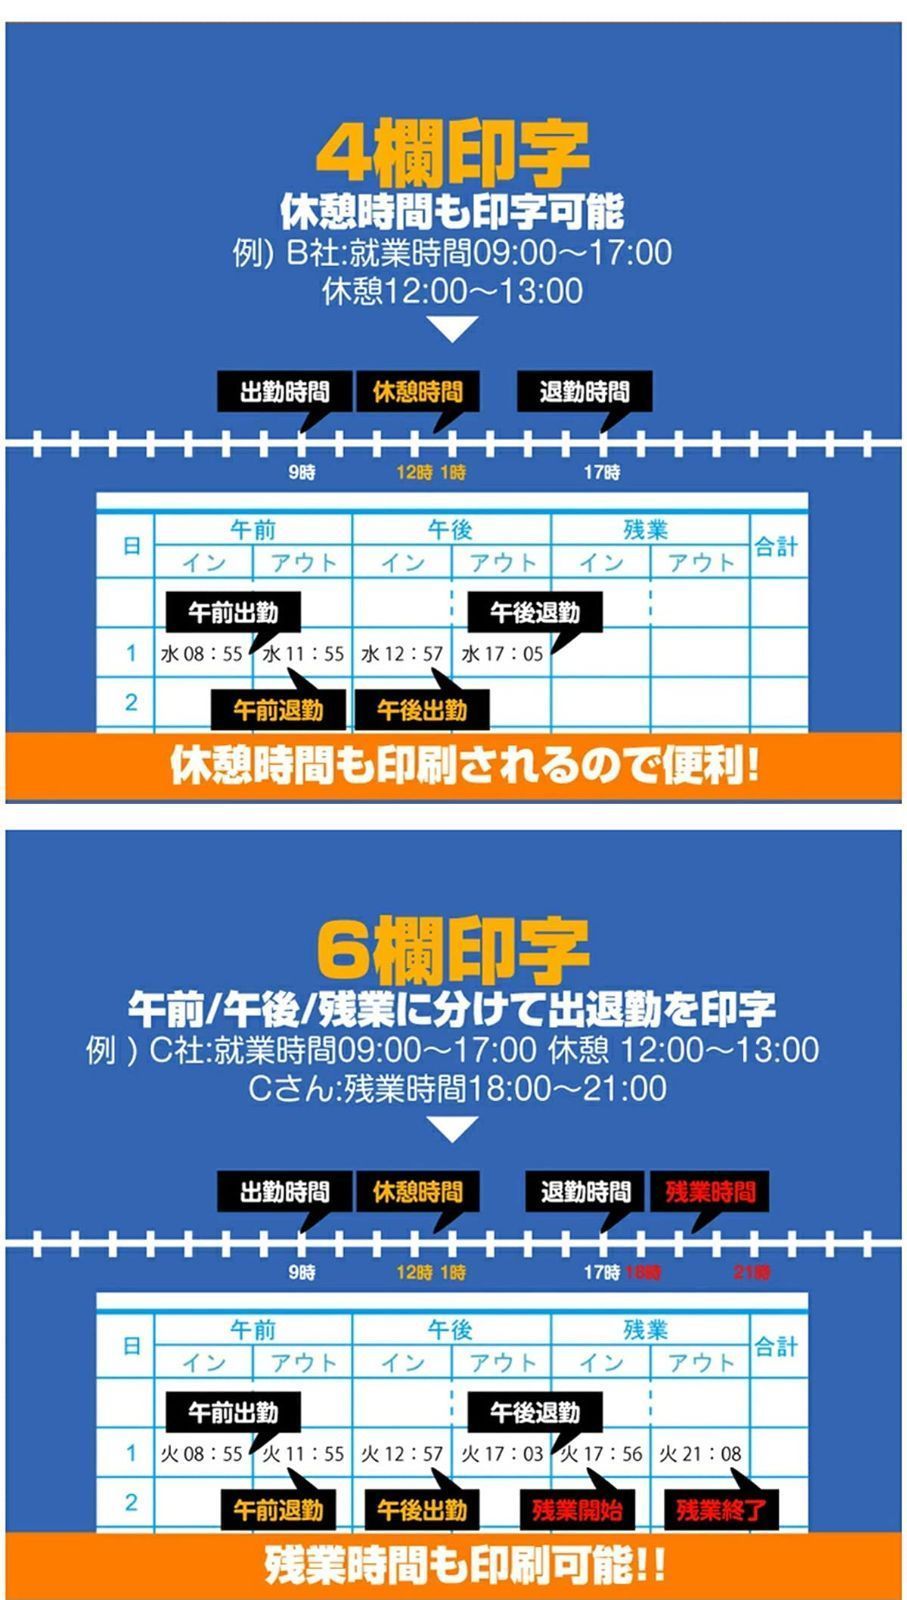 TOKAIZ タイムレコーダー 本体 6欄印字可能 両面印字モデル タイムカード５０枚付き TR-001s - 1